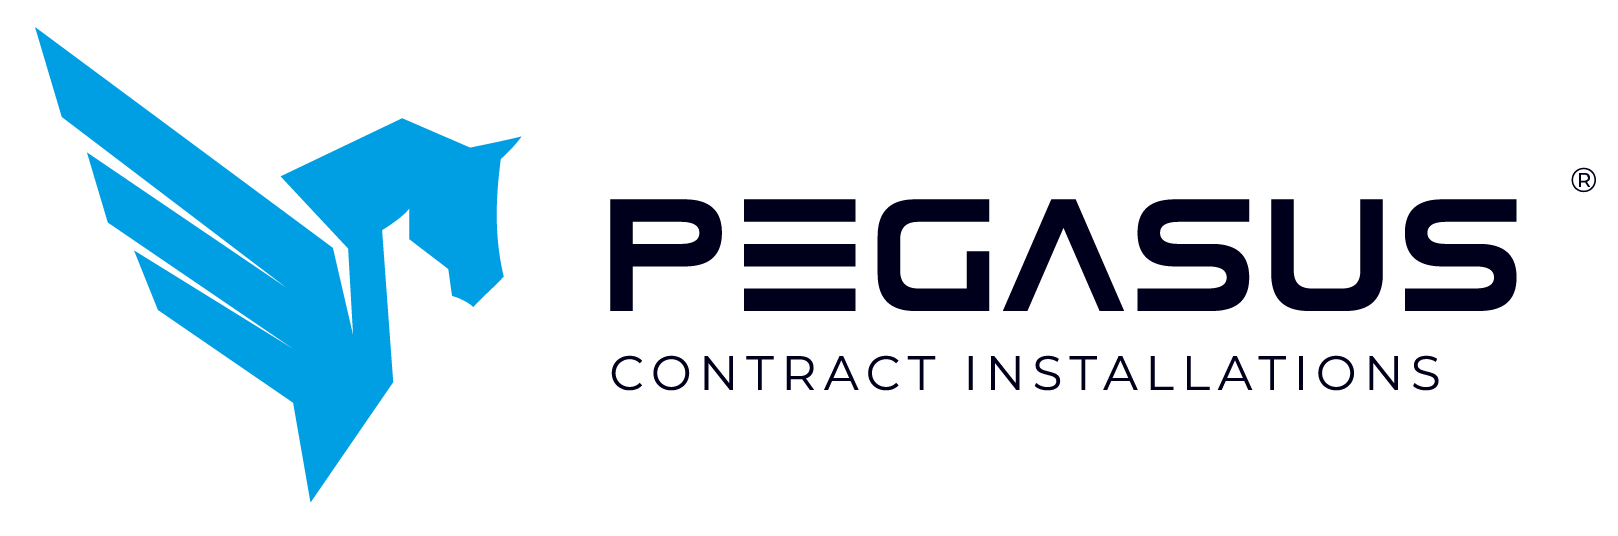 Pegasus Contract Installations